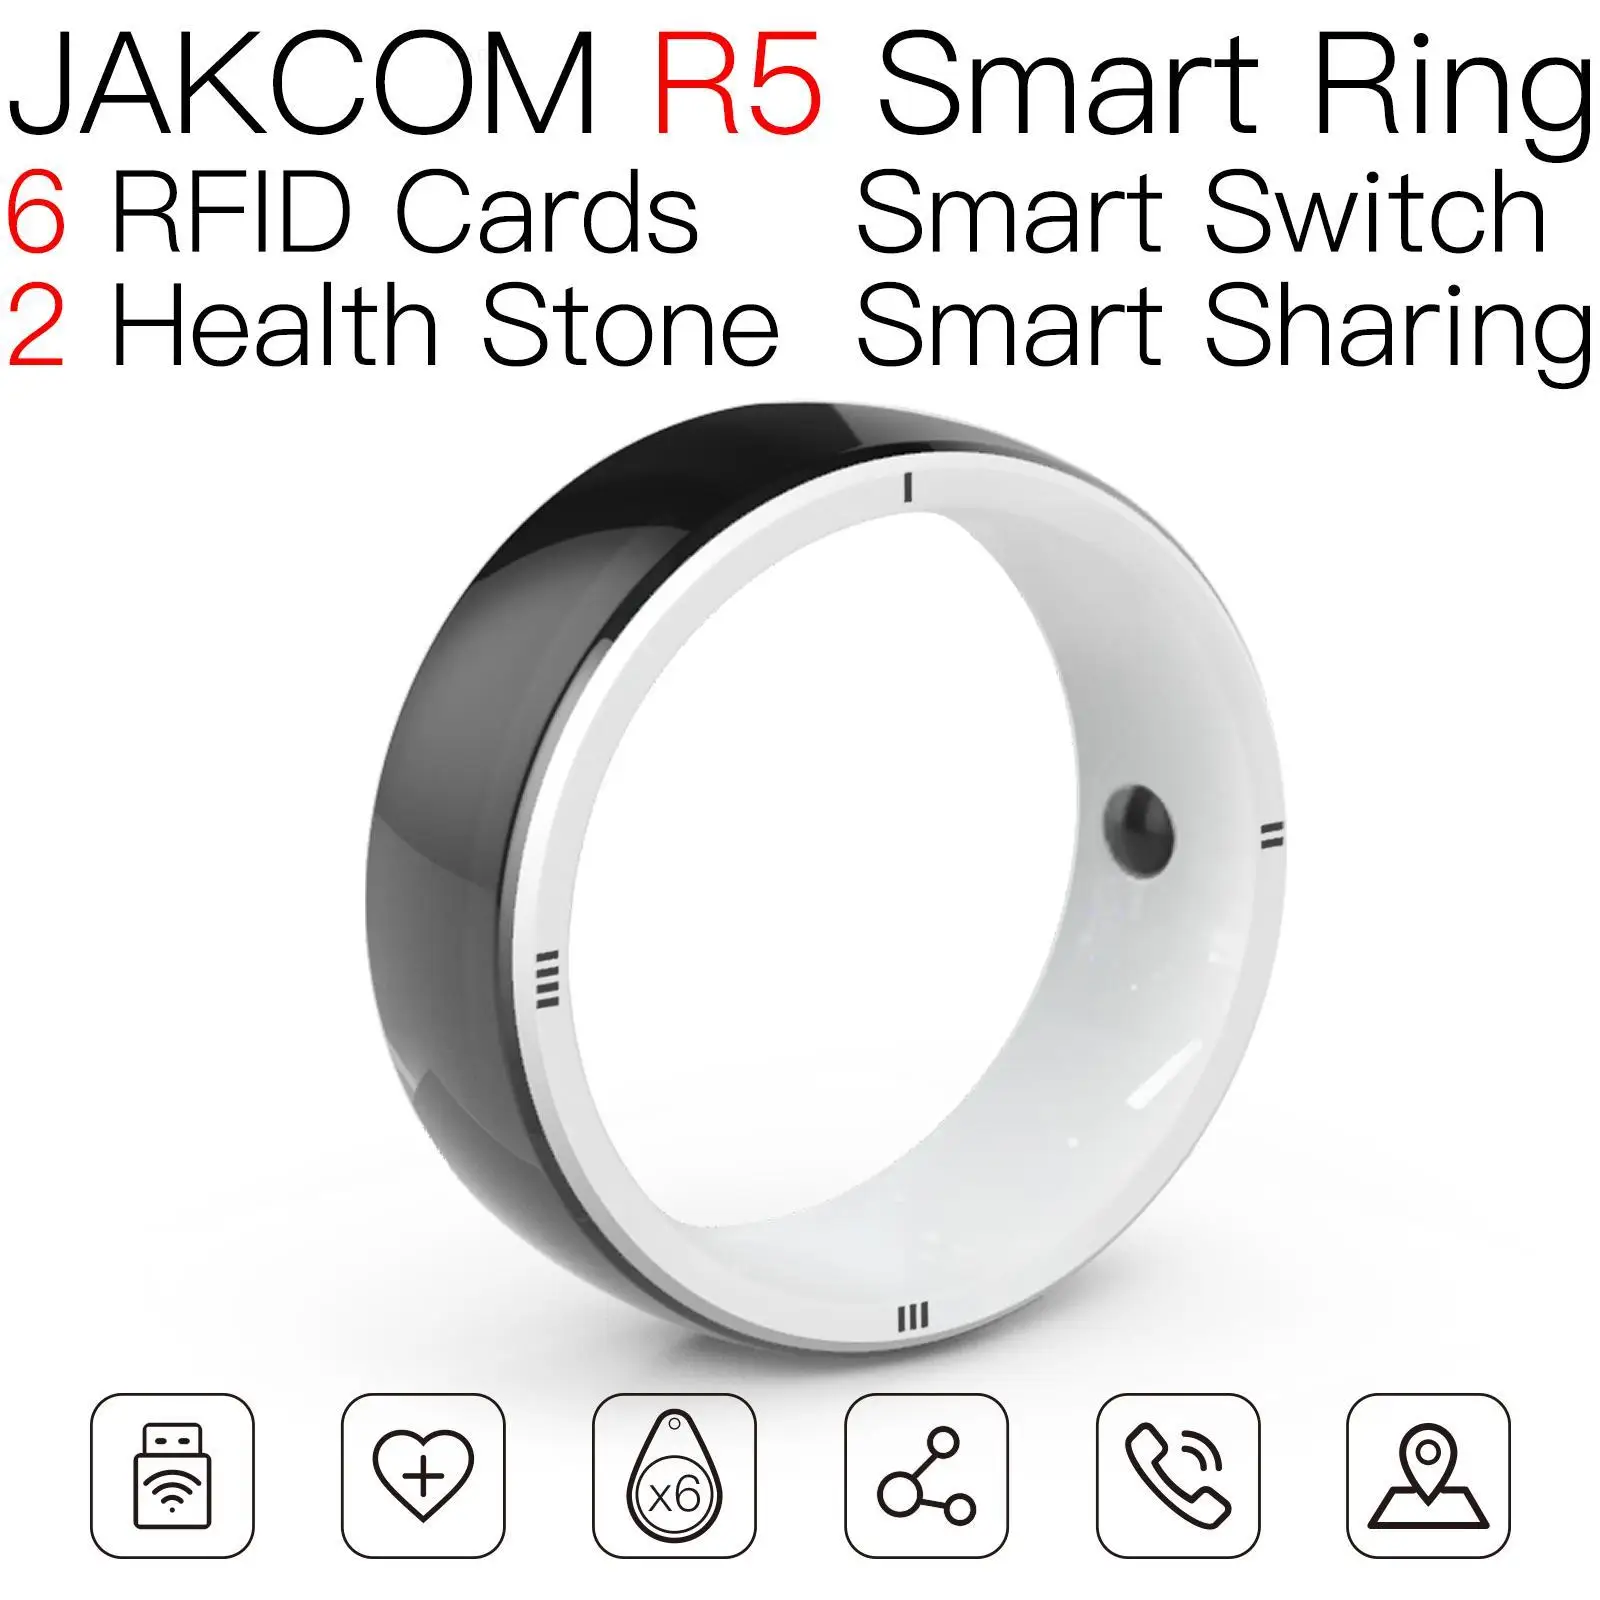 

JAKCOM R5 Smart Ring Newer than uhf rfid ear tag anti theft barcode tags tk4100 token key copy eprom pvc pet card